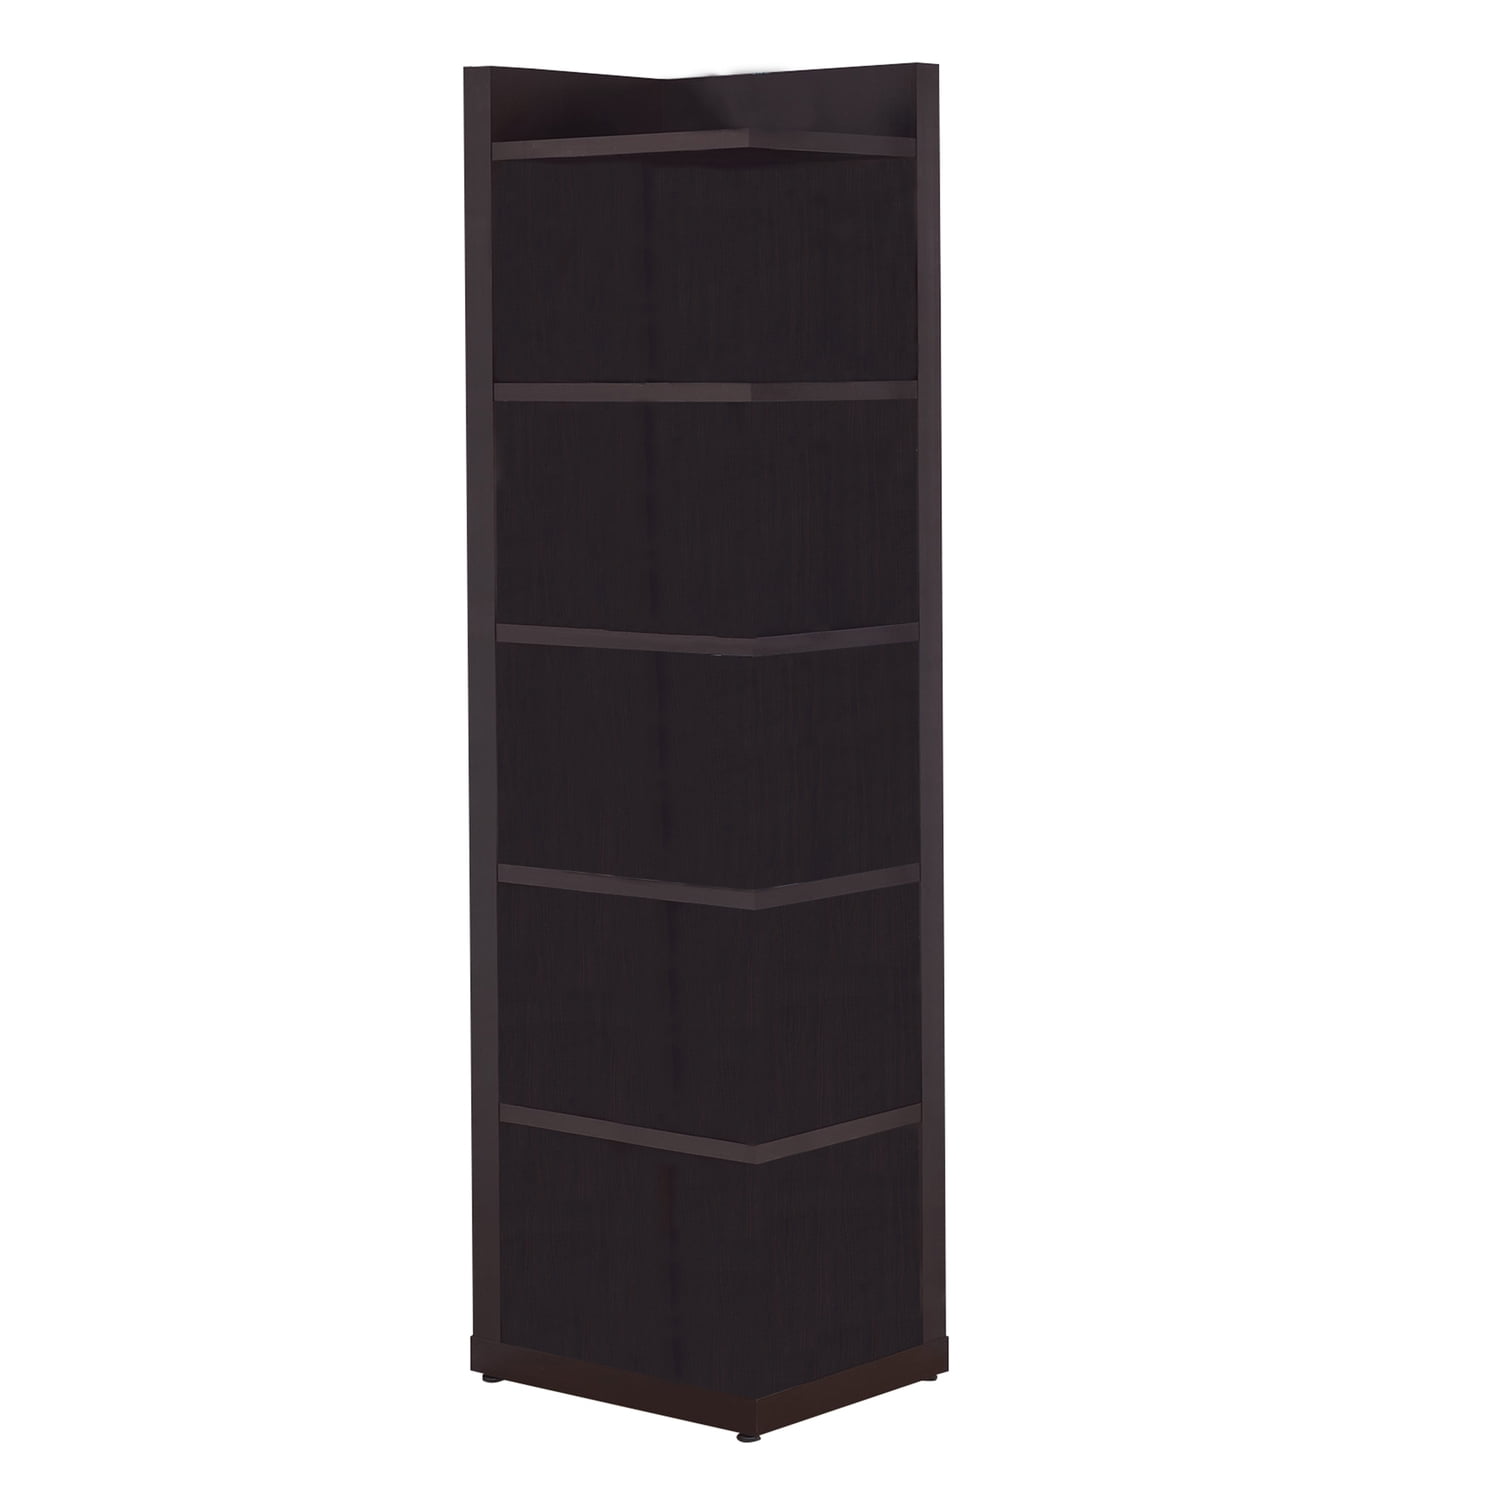 Picture of Benzara BM156237 71 x 19.75 x 15.75 in. Radiant Brown Wooden Corner Bookcase